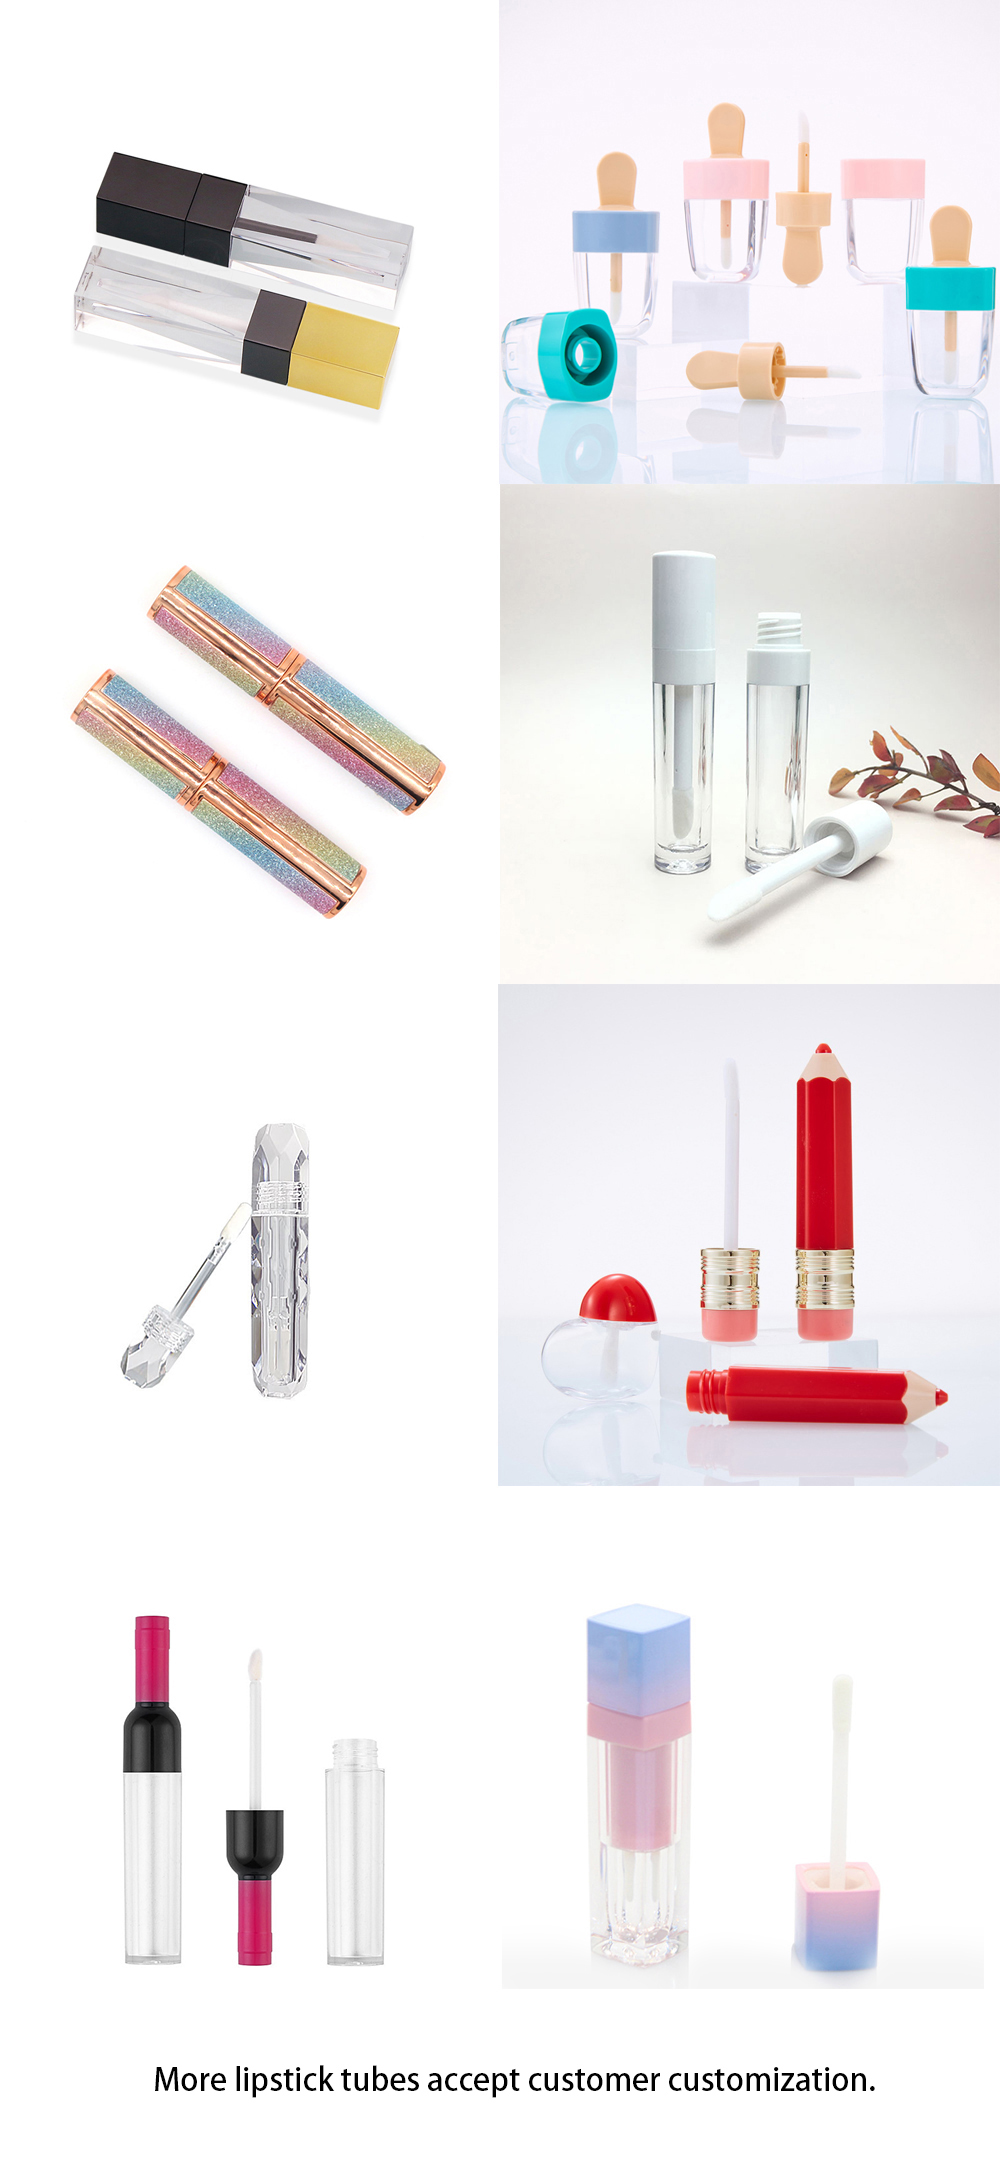 3. Liquid lipstick tube